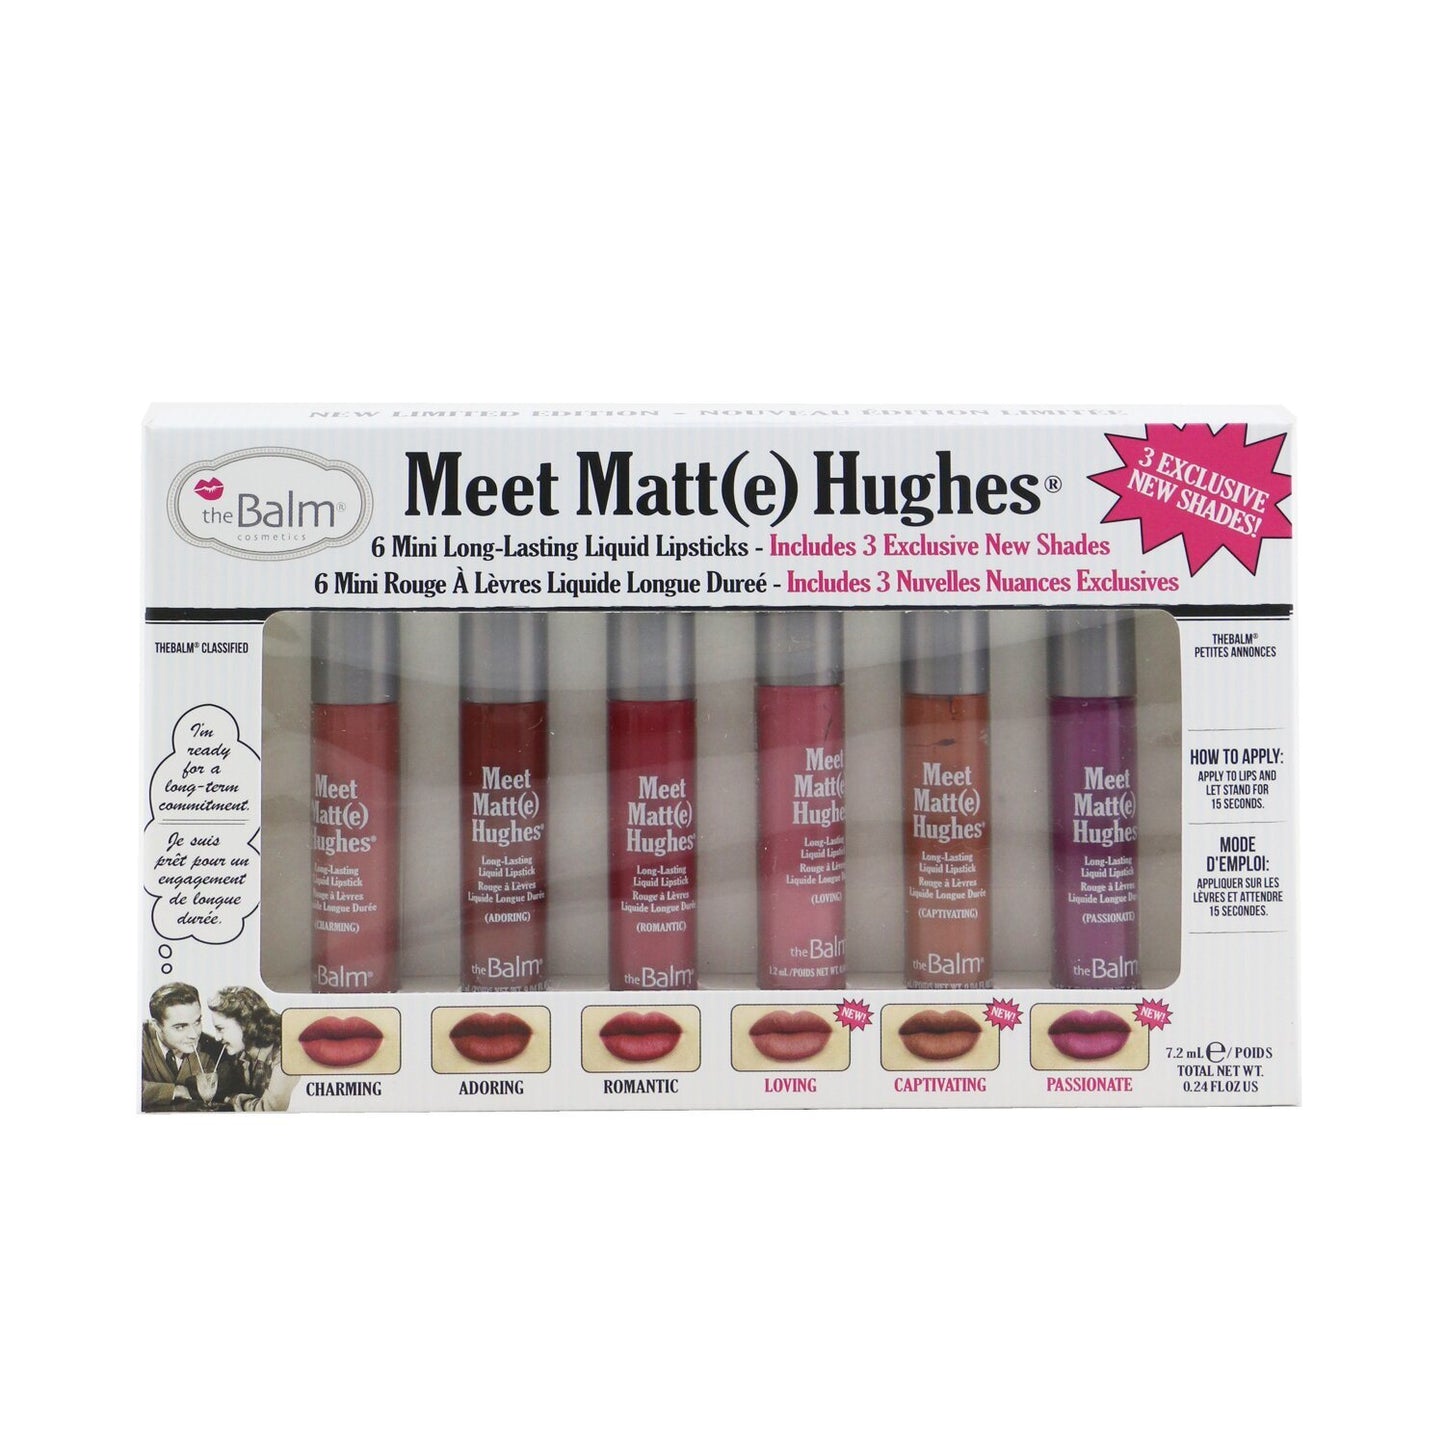 Meet Matt(e) Hughes 6 Mini Long Lasting Liquid Lipsticks Kit - Vol. 3